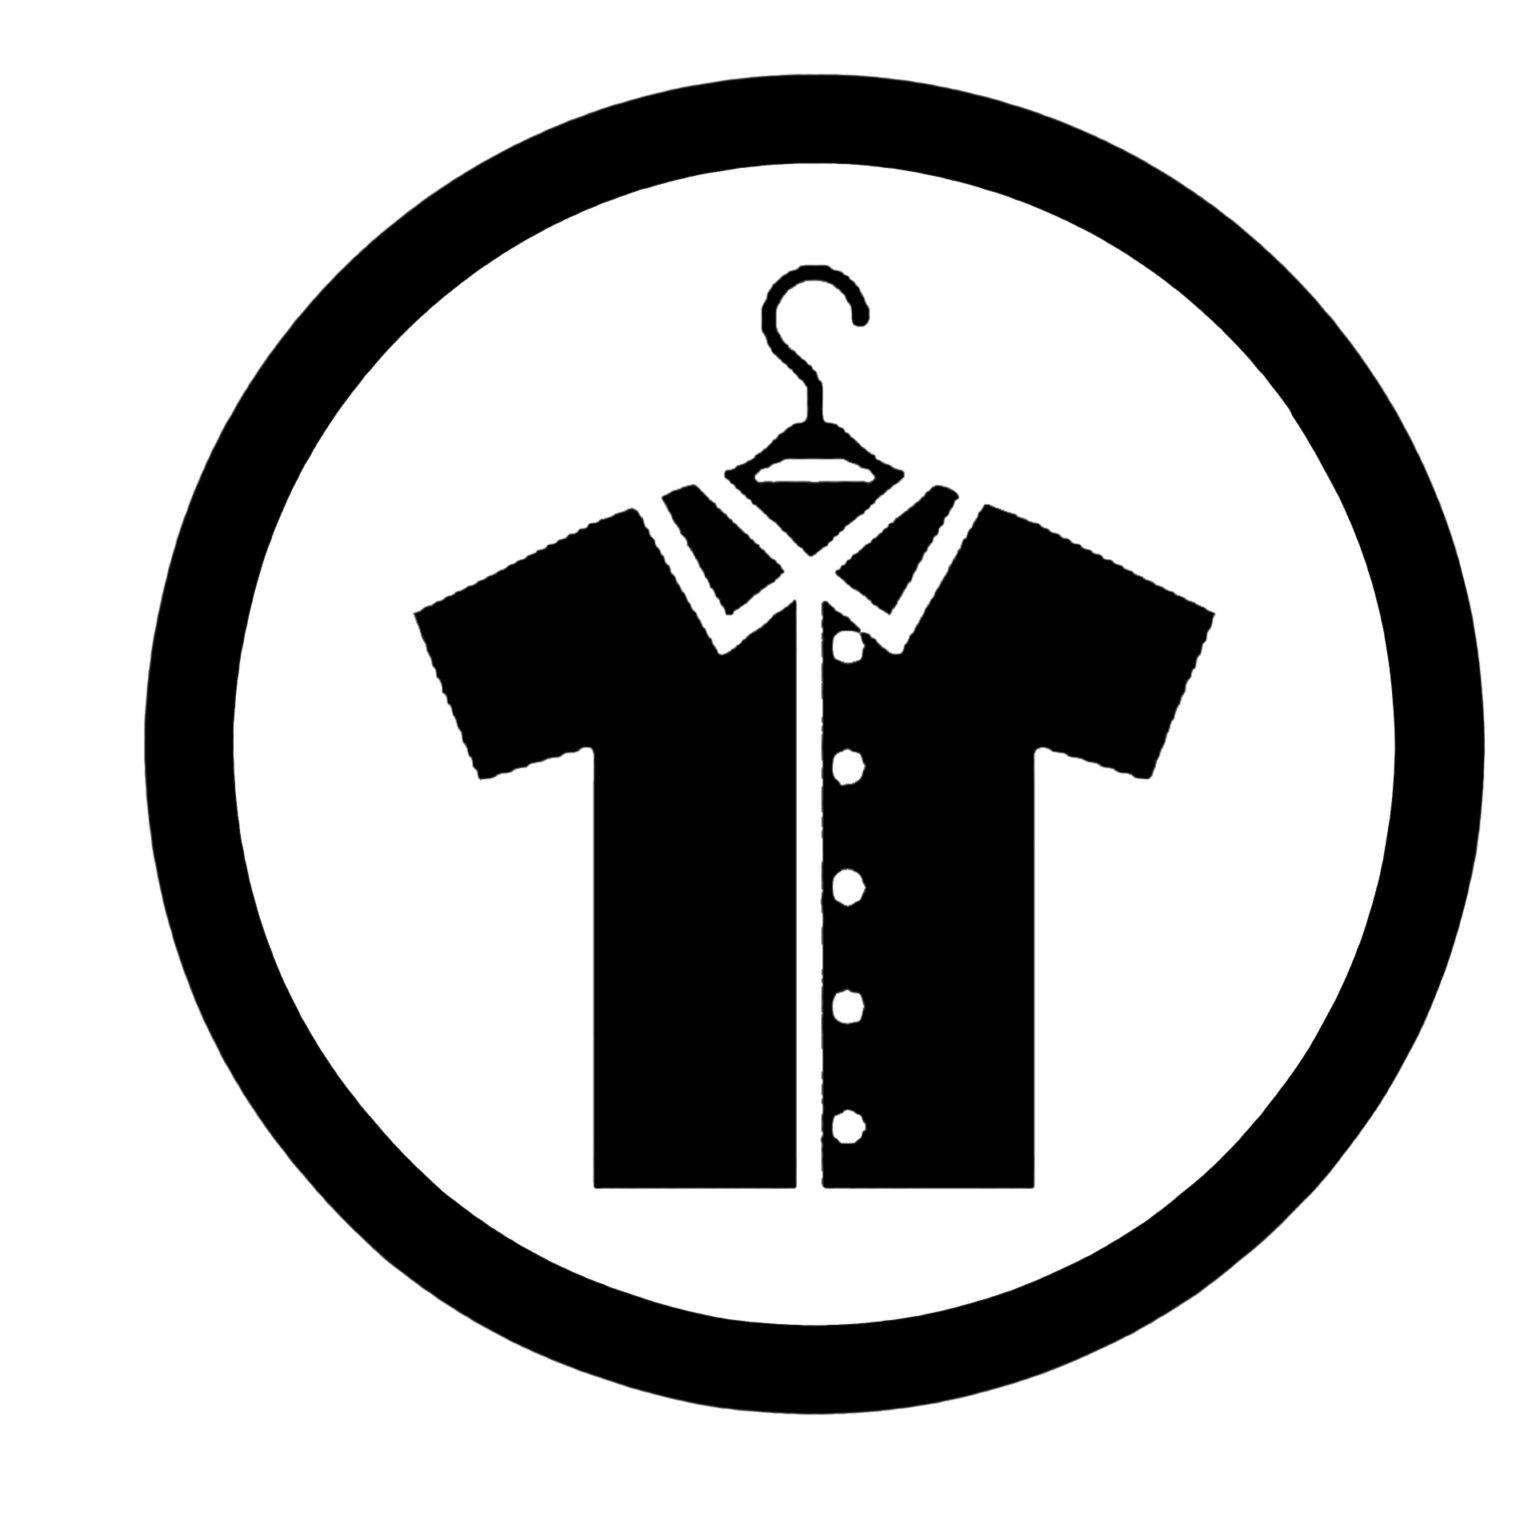 Картинка на значок на одежду. Значки на одежде. Пиктограмма одежда. Логотип одежды.